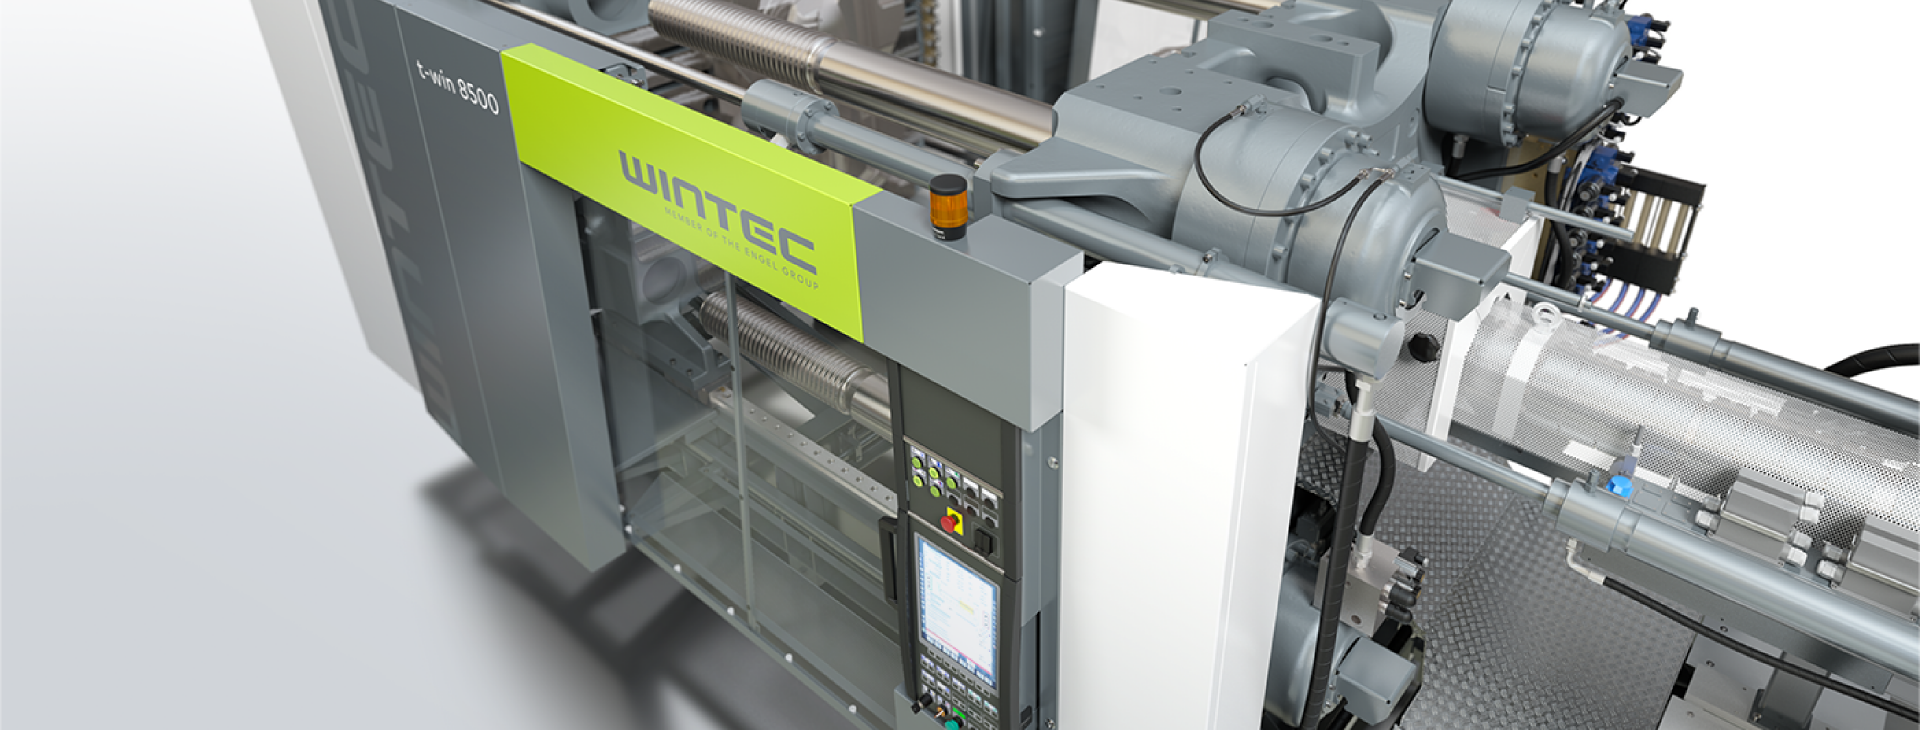 Wintec Produkt Design Header Bild | Markenauftritt Wien